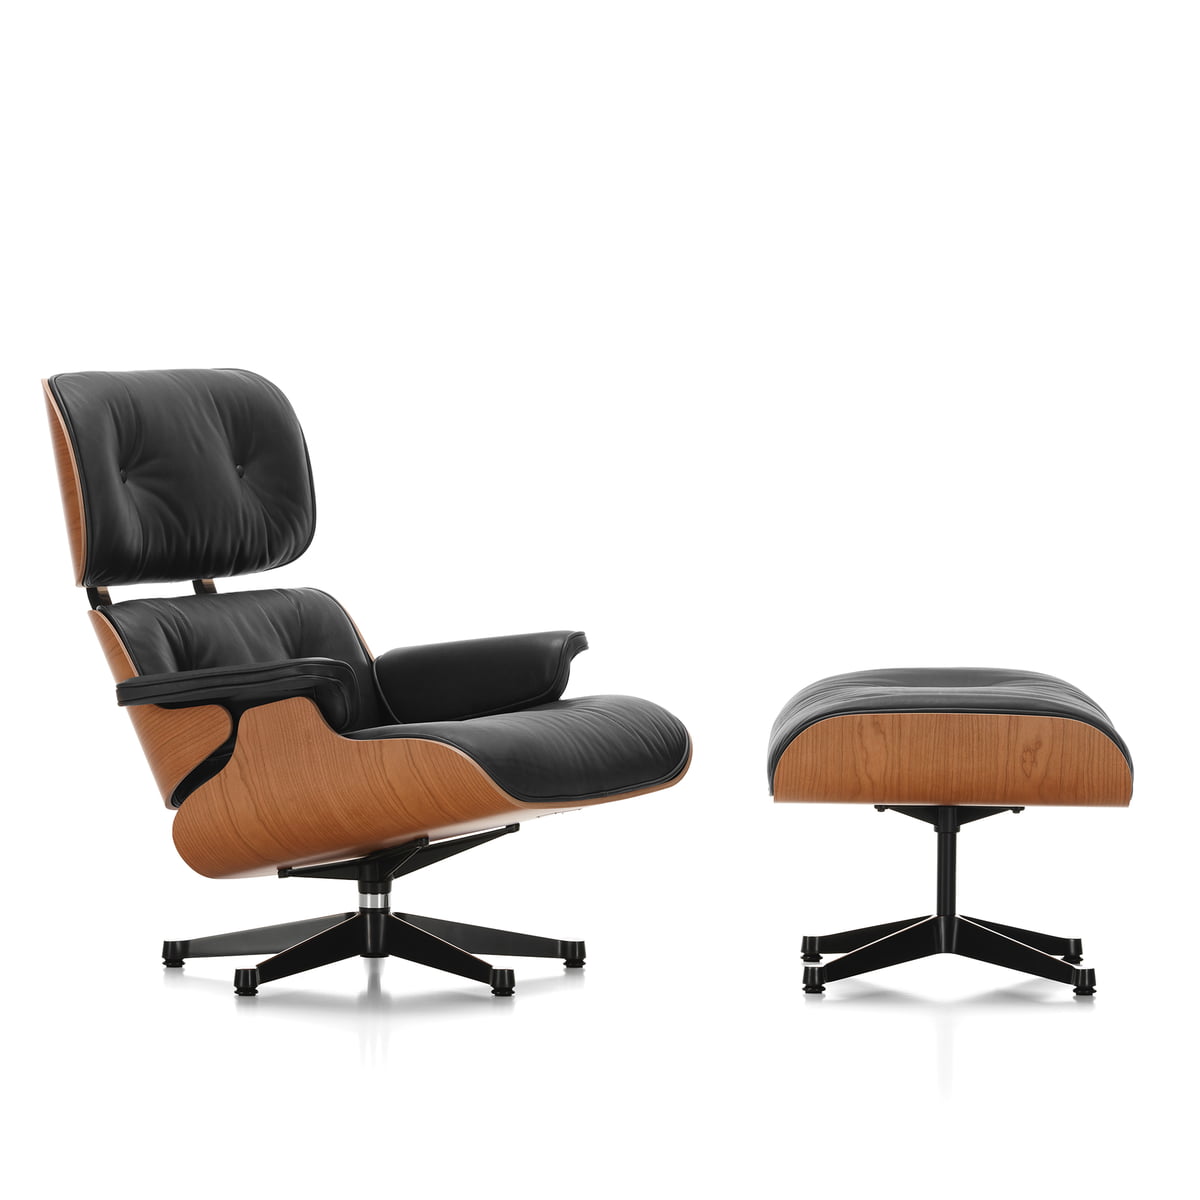 https://cdn.connox.com/m/100030/537406/media/Vitra/Lounge-chair-ottoman/Kirschbaum/Vitra-Lounge-Chair-und-Ottoman-poliert-schwarz-Kirschbaum-Leder-Premium-nero.jpg